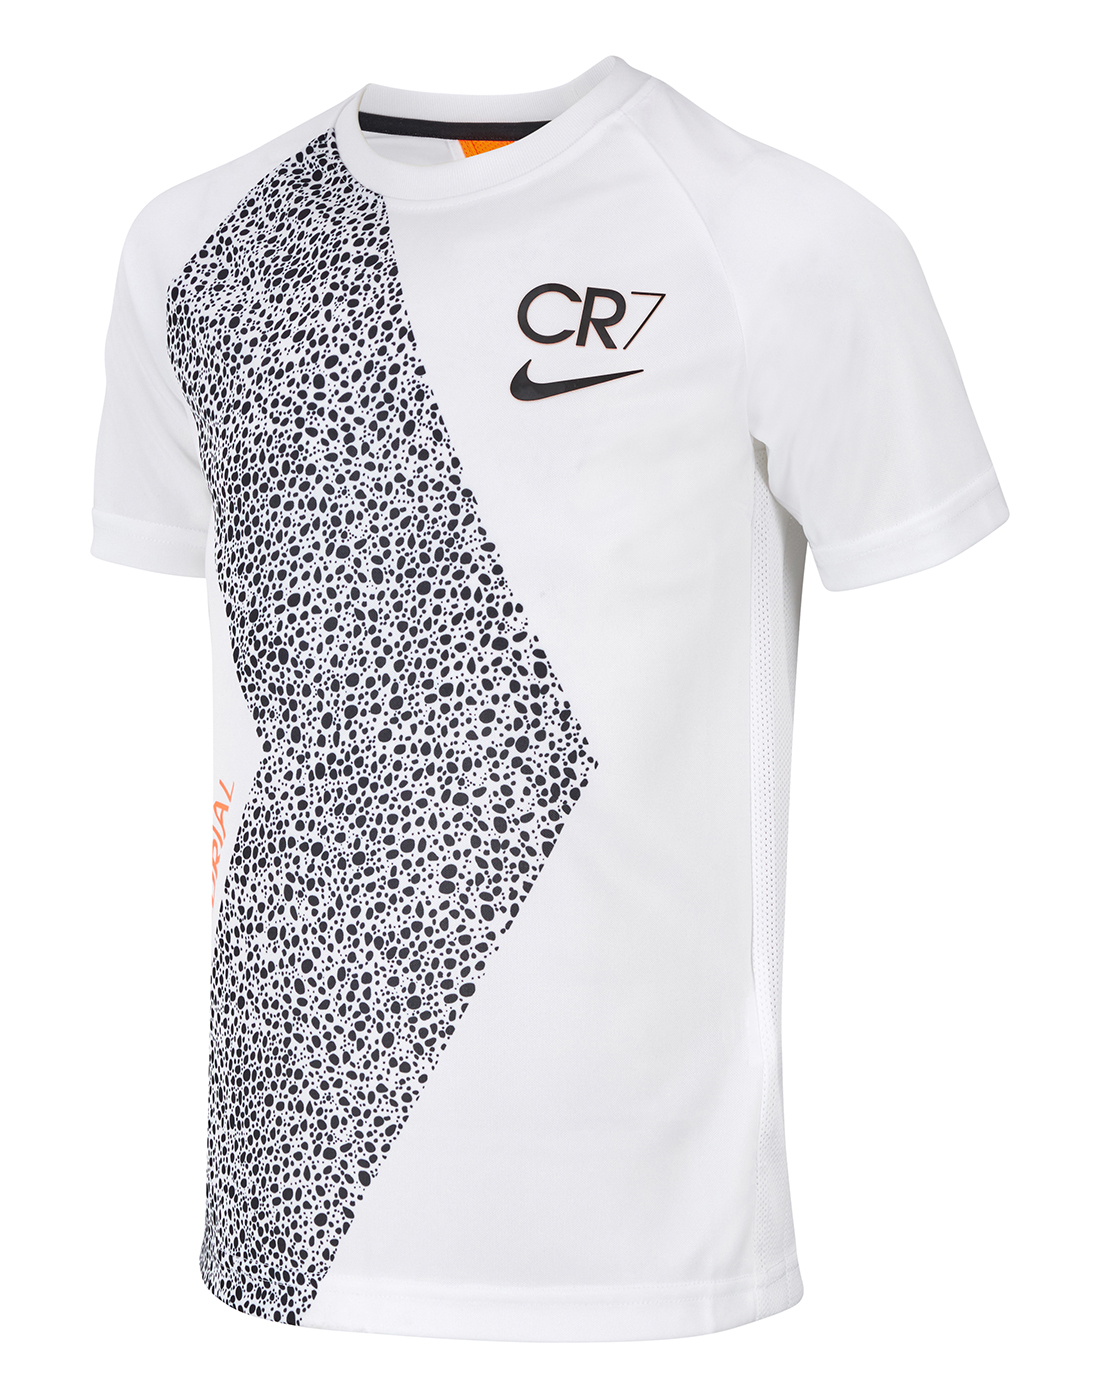 Nike Older Boys CR7 T-shirt | Life Style Sports